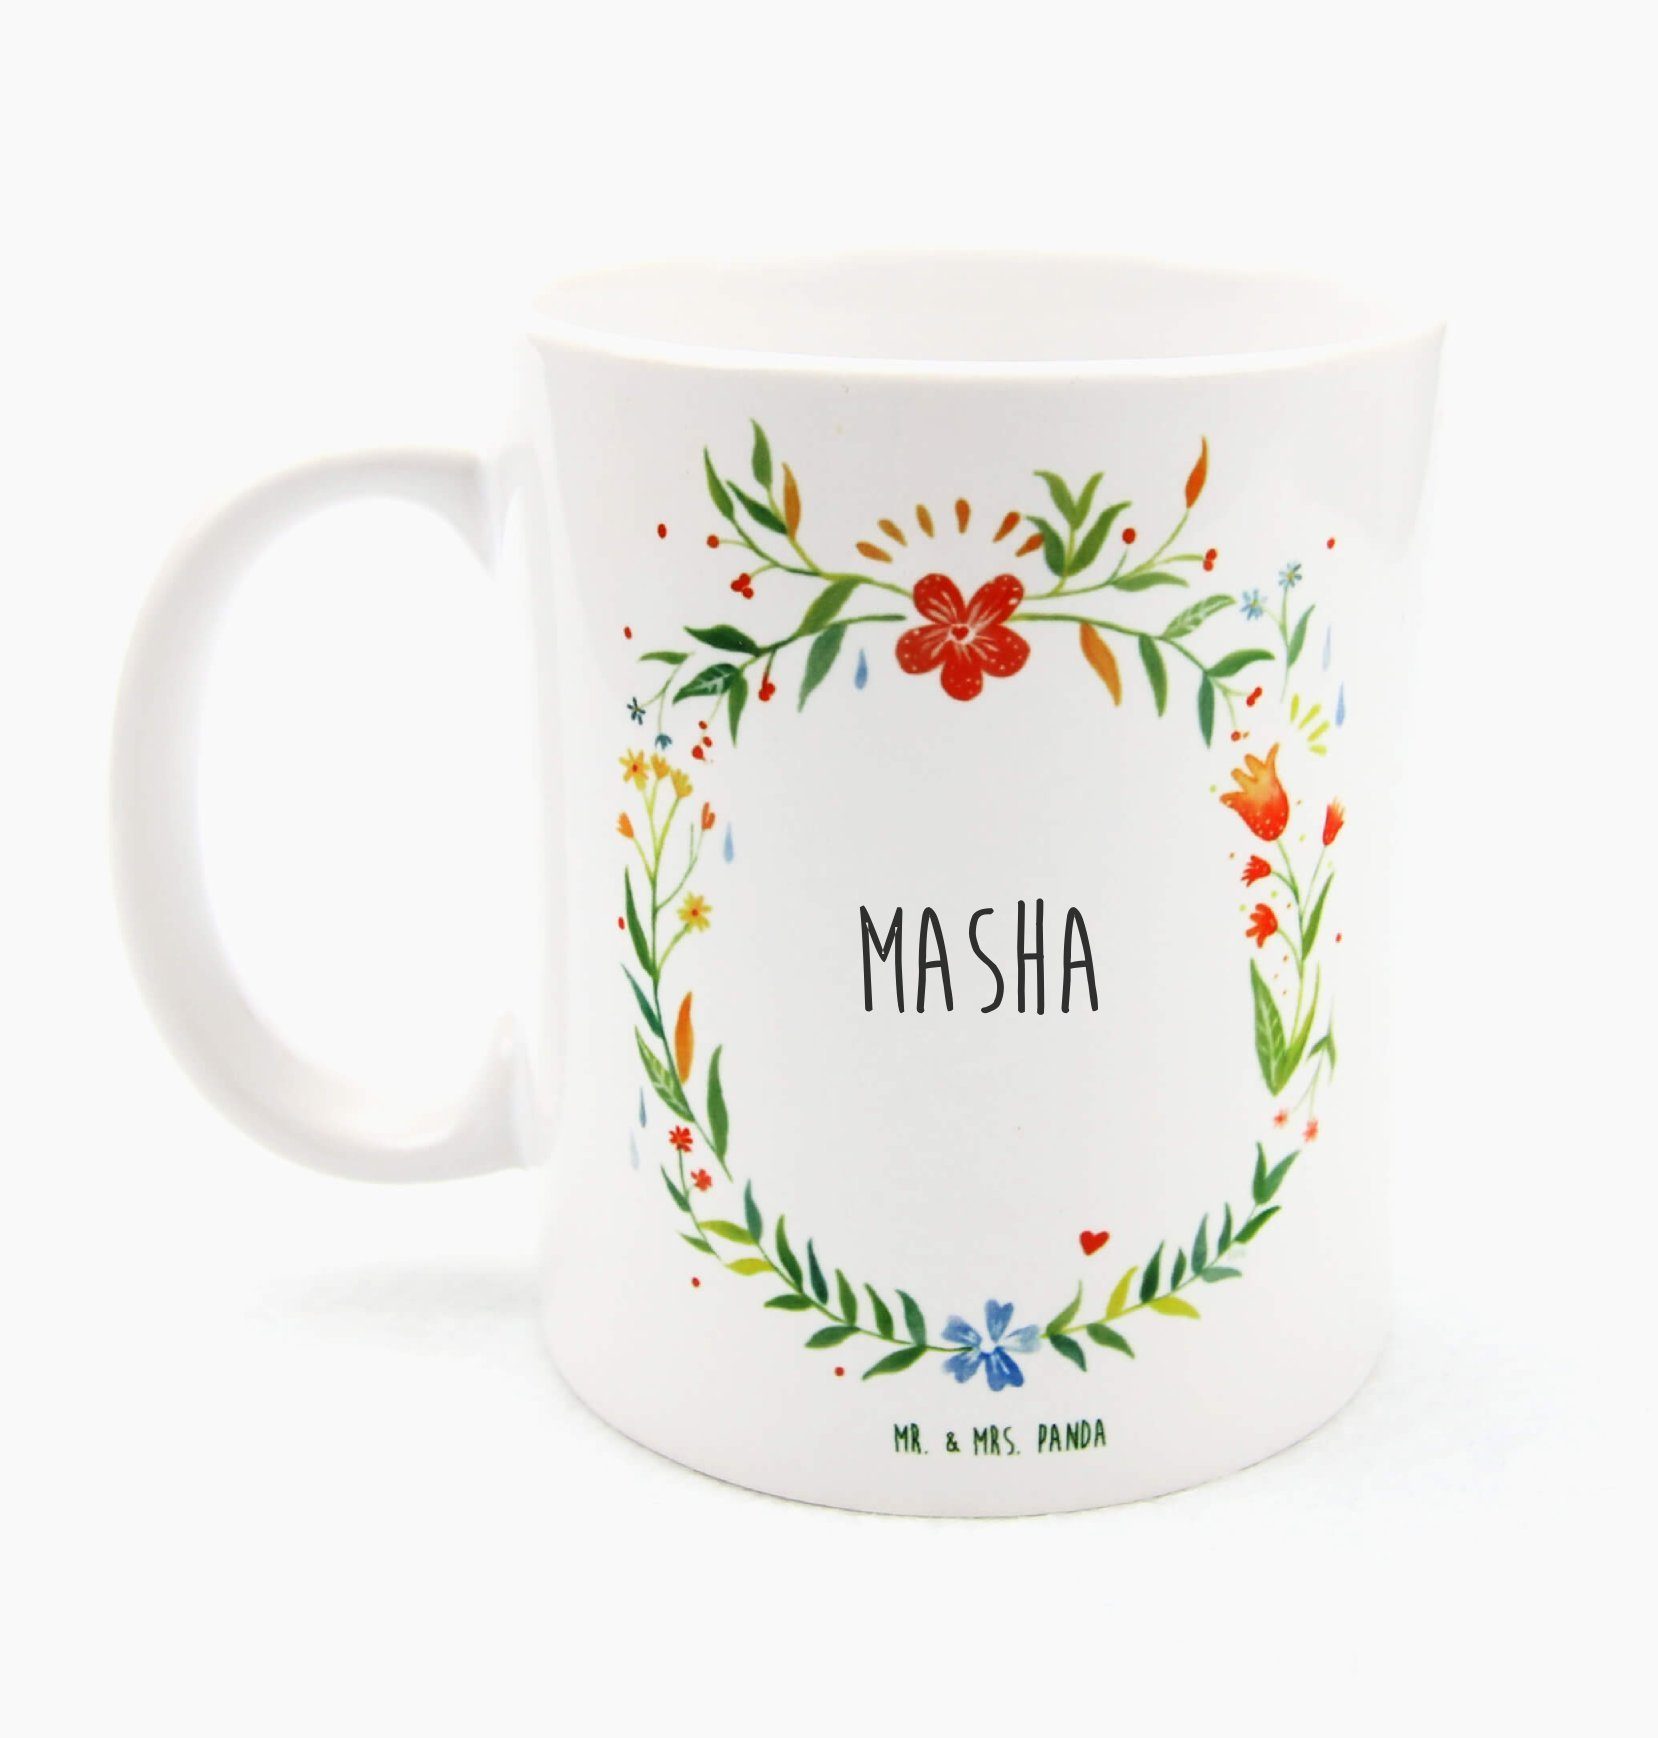 Mr. & Mrs. Panda Tasse Masha - Geschenk, Kaffeetasse, Büro Tasse, Teebecher, Tasse, Teetasse, Keramik